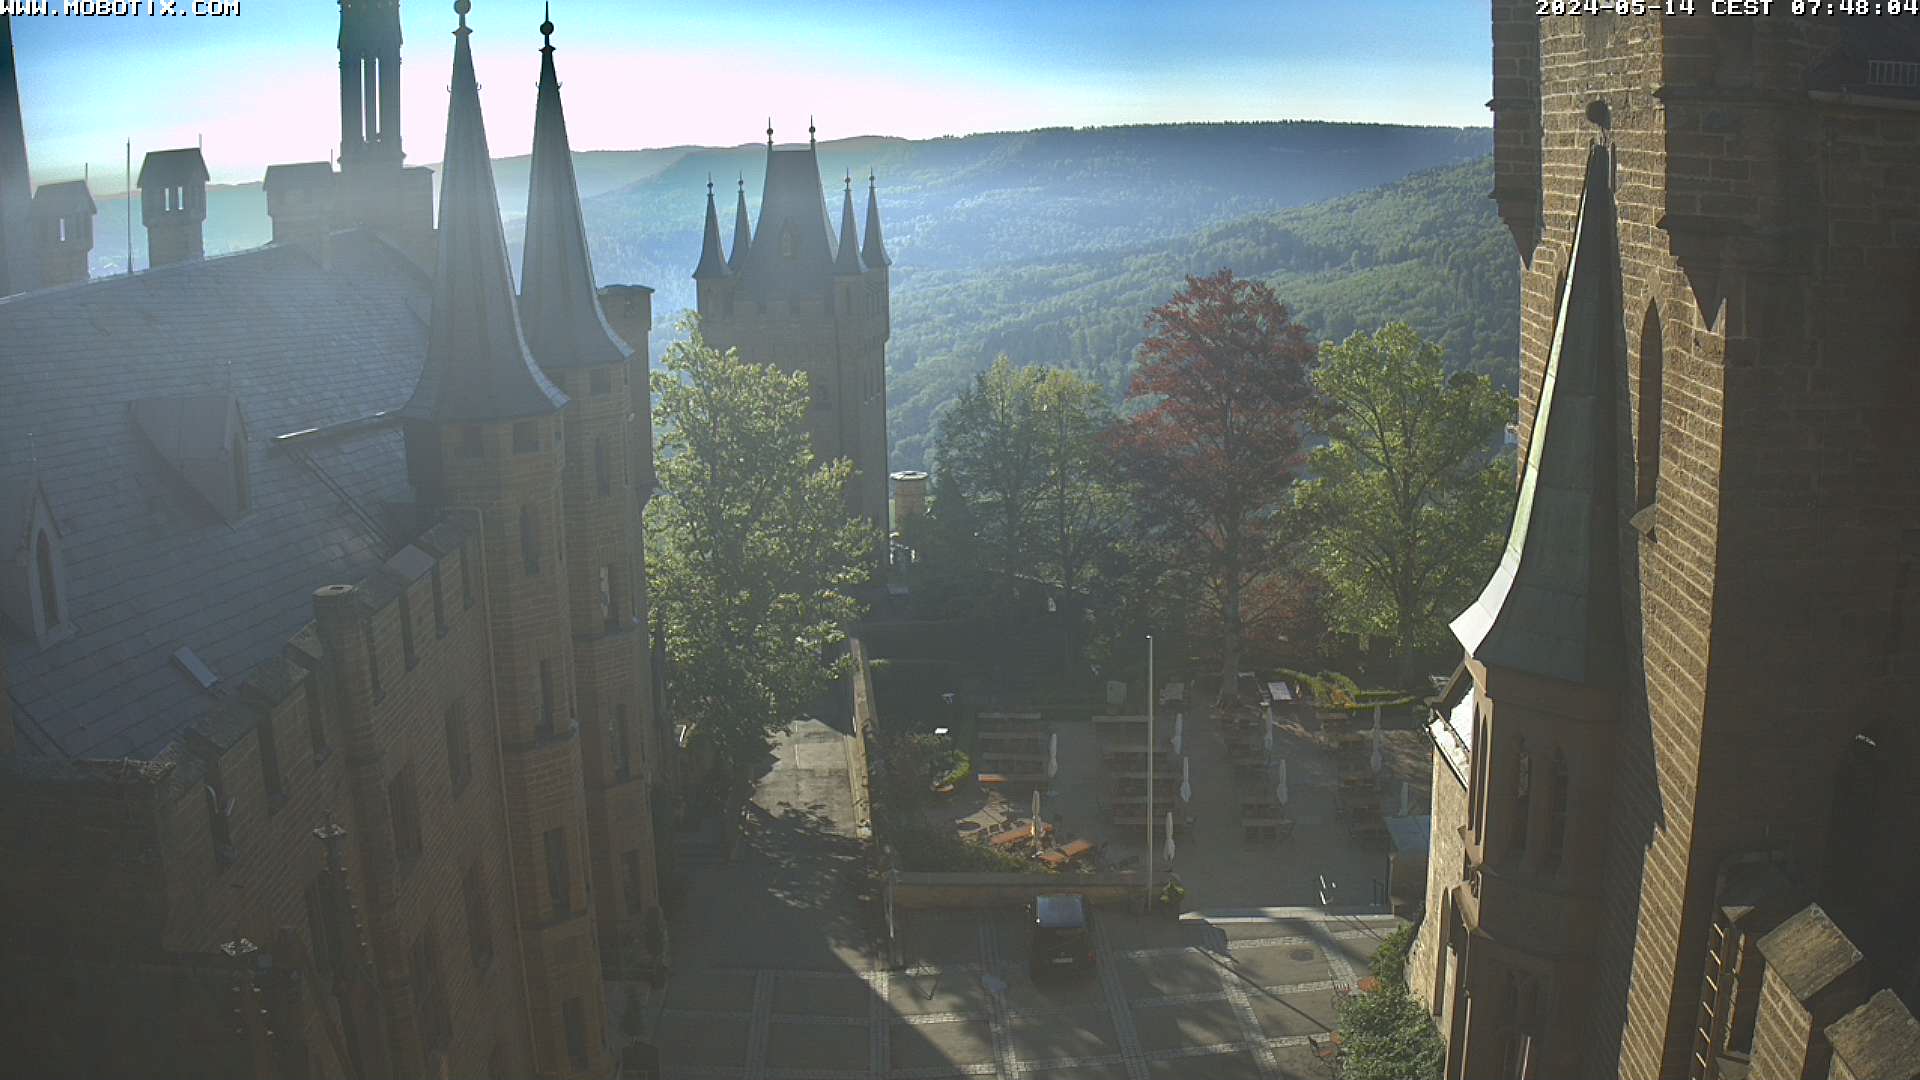 Burg Hohenzollern Dom. 07:50